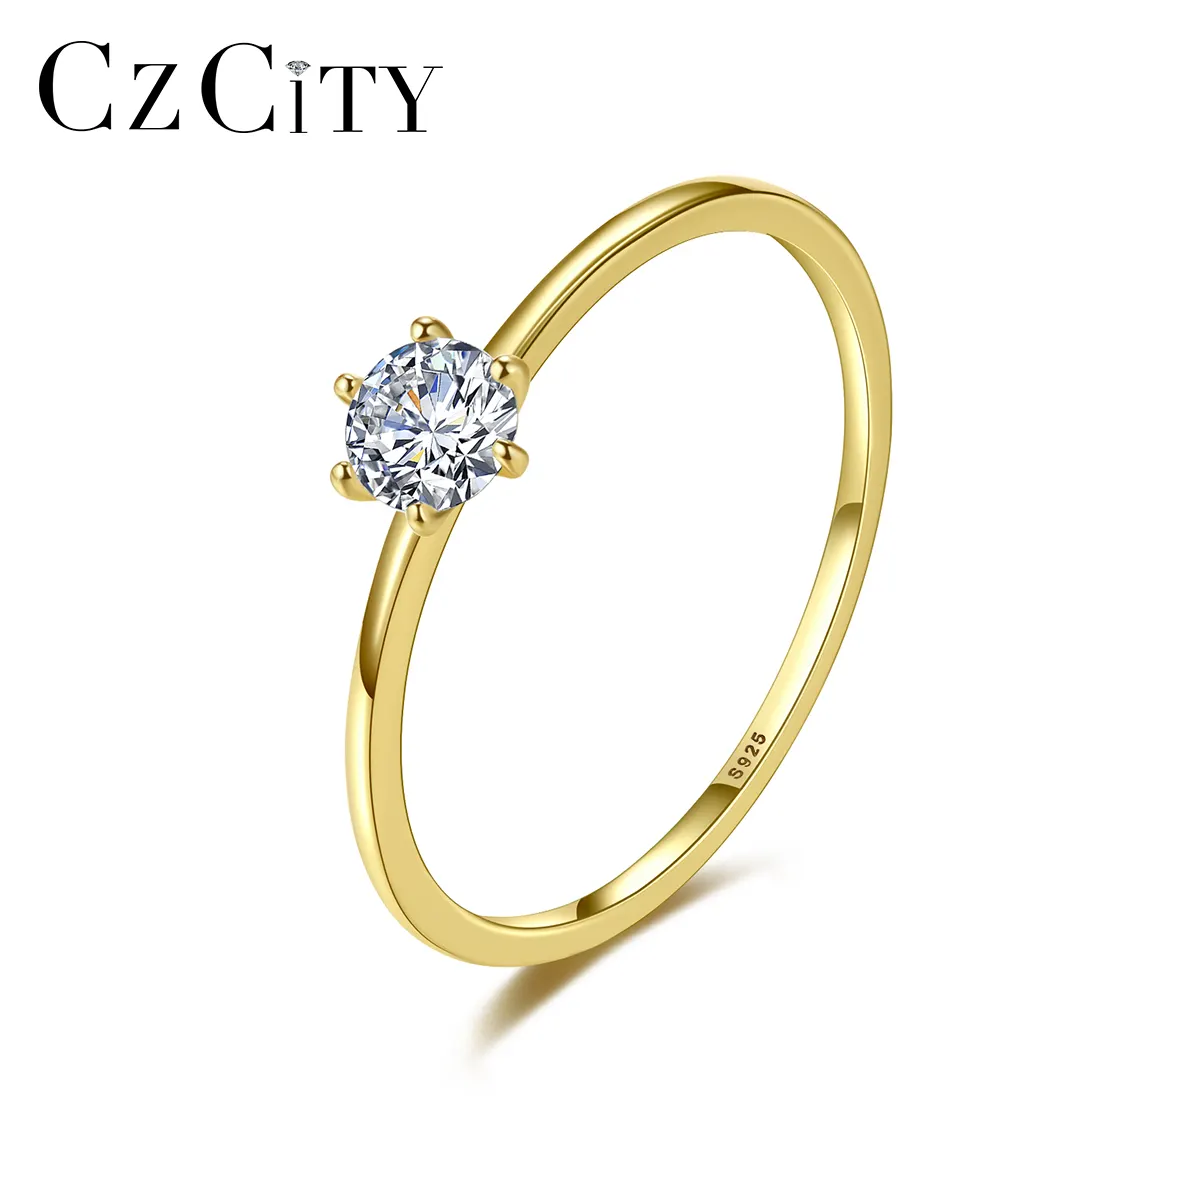 CZCITY חריטה מעוקב Zirconia Shinning כמו יהלום אמיתי טבעת נשים קלאסי אחת CZ ראשי אבן טבעות זהב מצופה